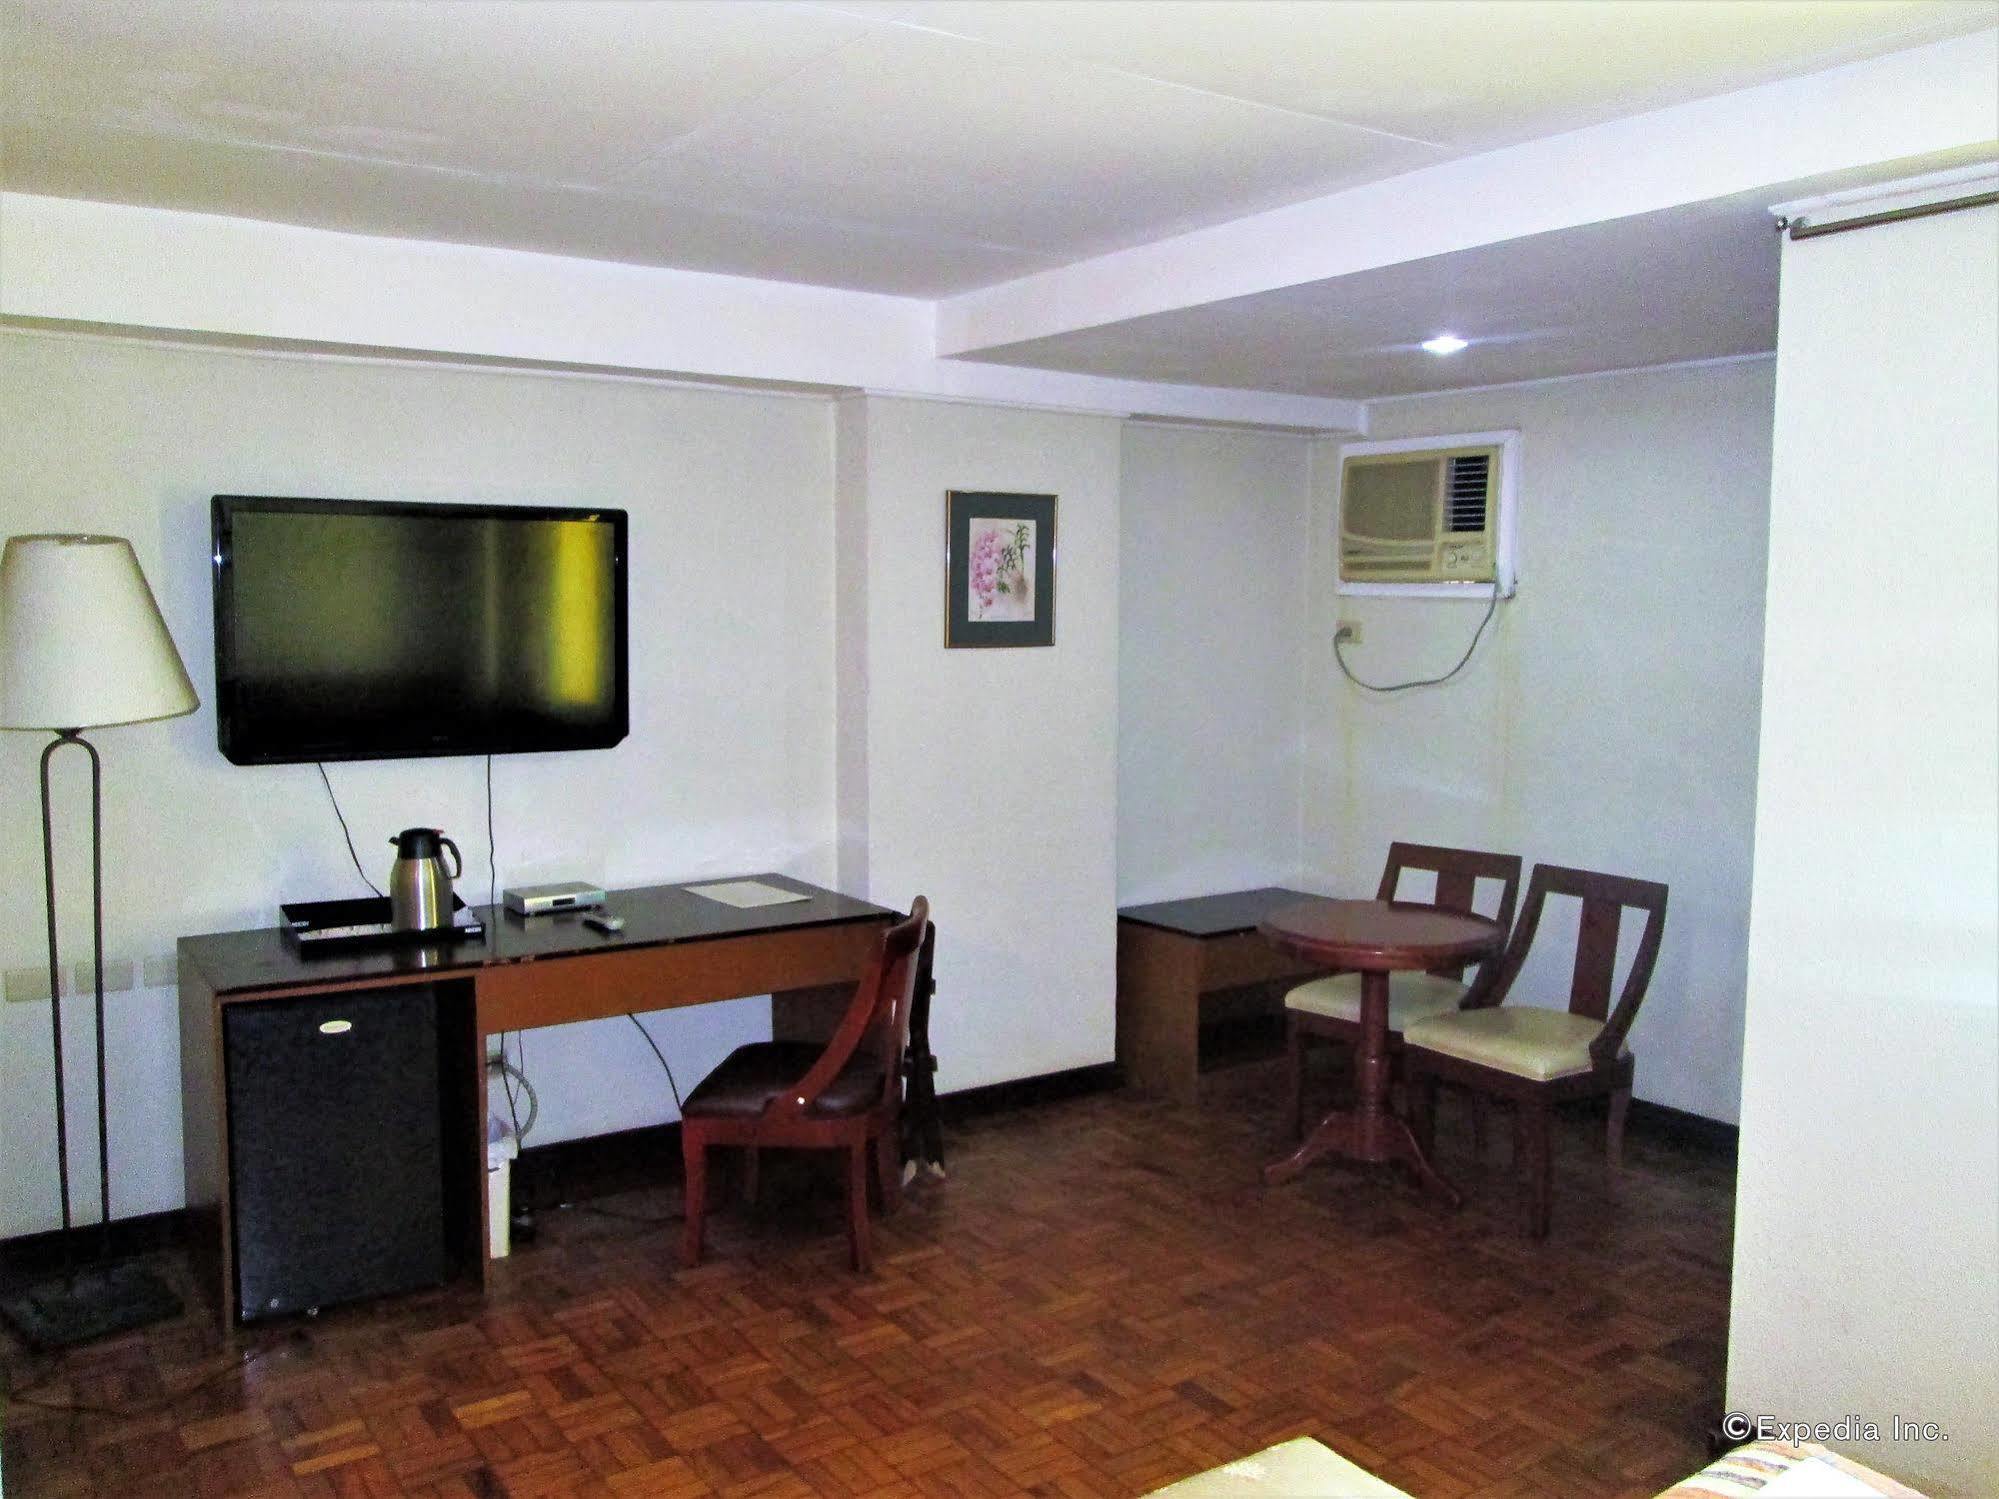 Country Village Hotel Cagayan de Oro Exterior photo